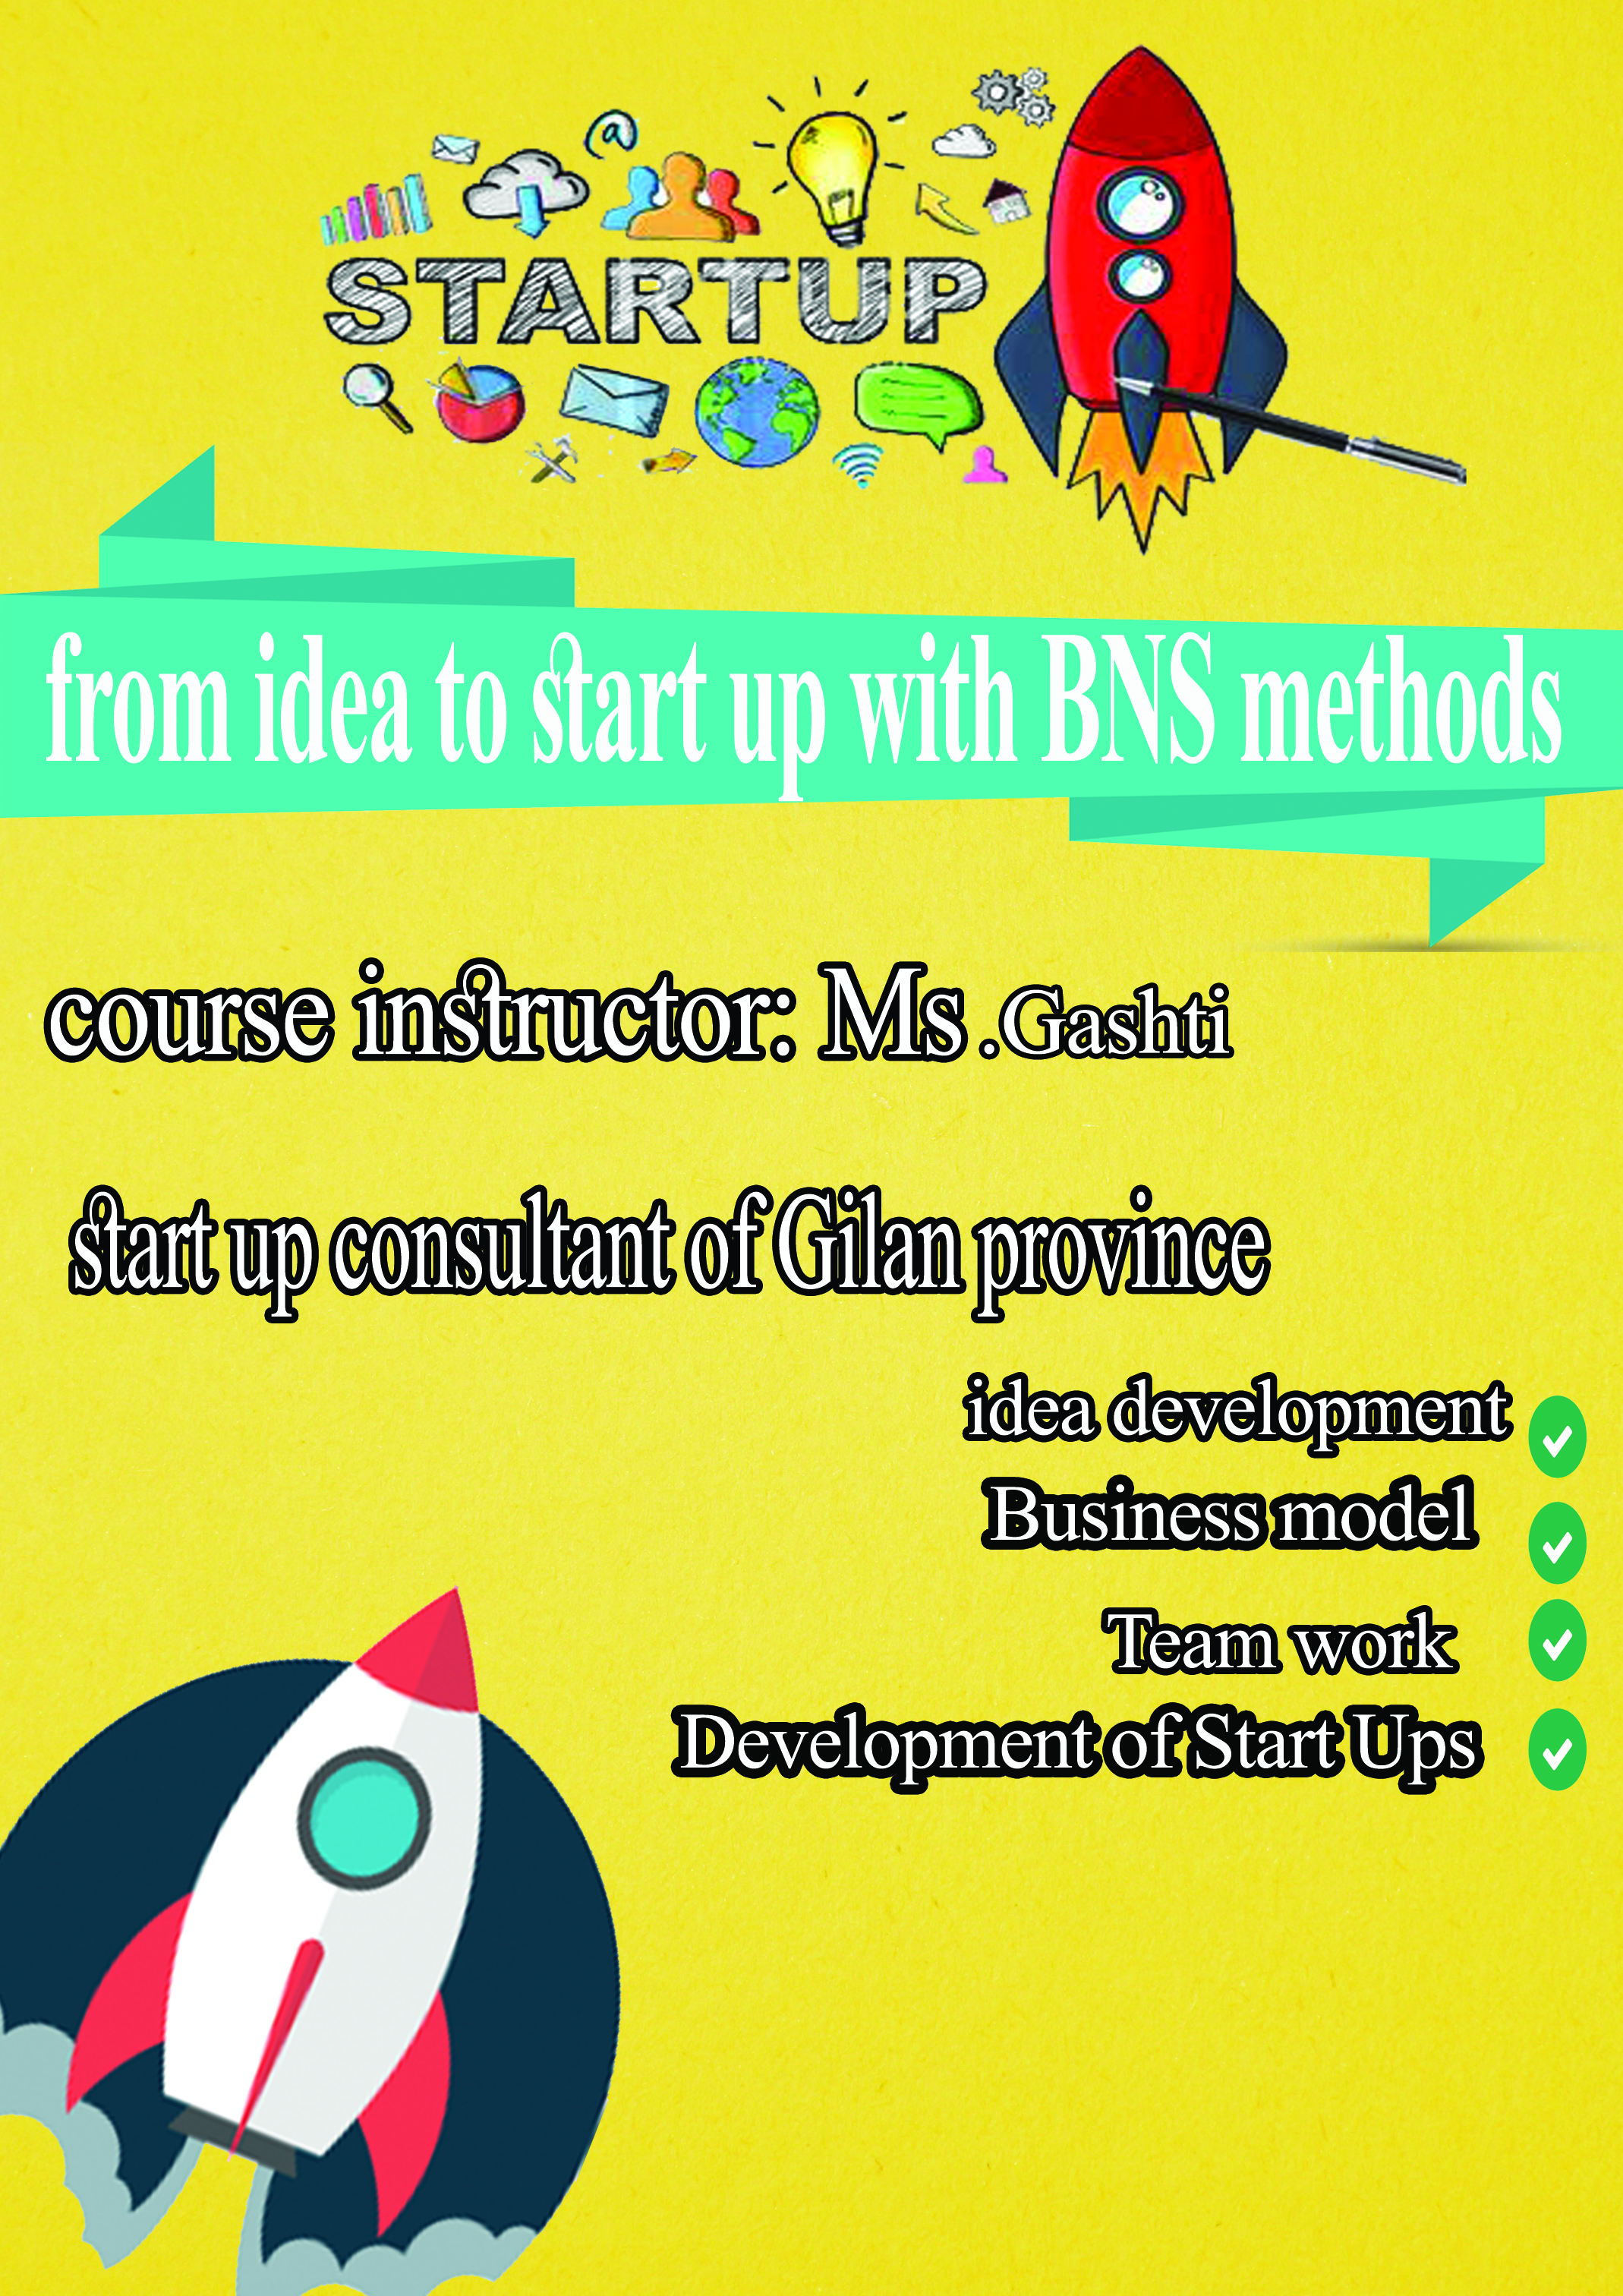 START UP workshop with BNS methods